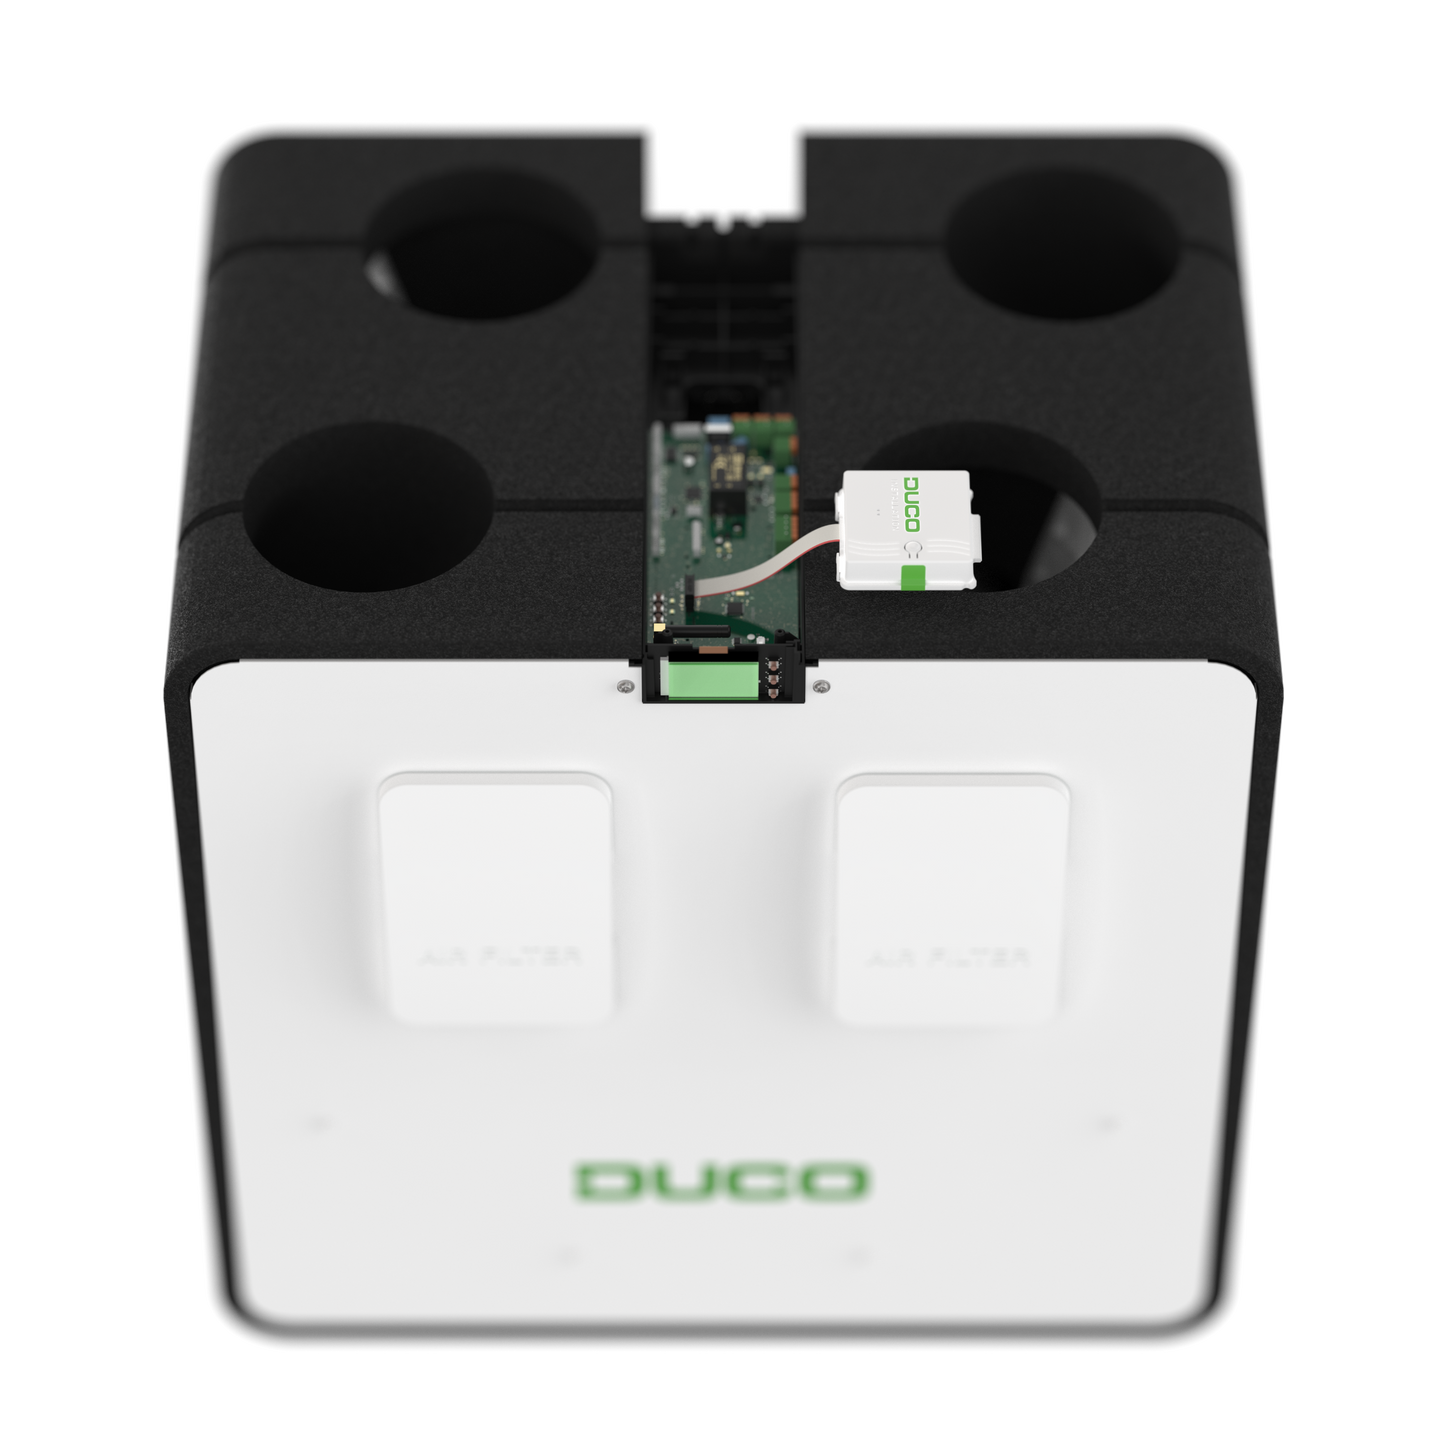 DucoBox Energy Comfort + Duco Installation Kit